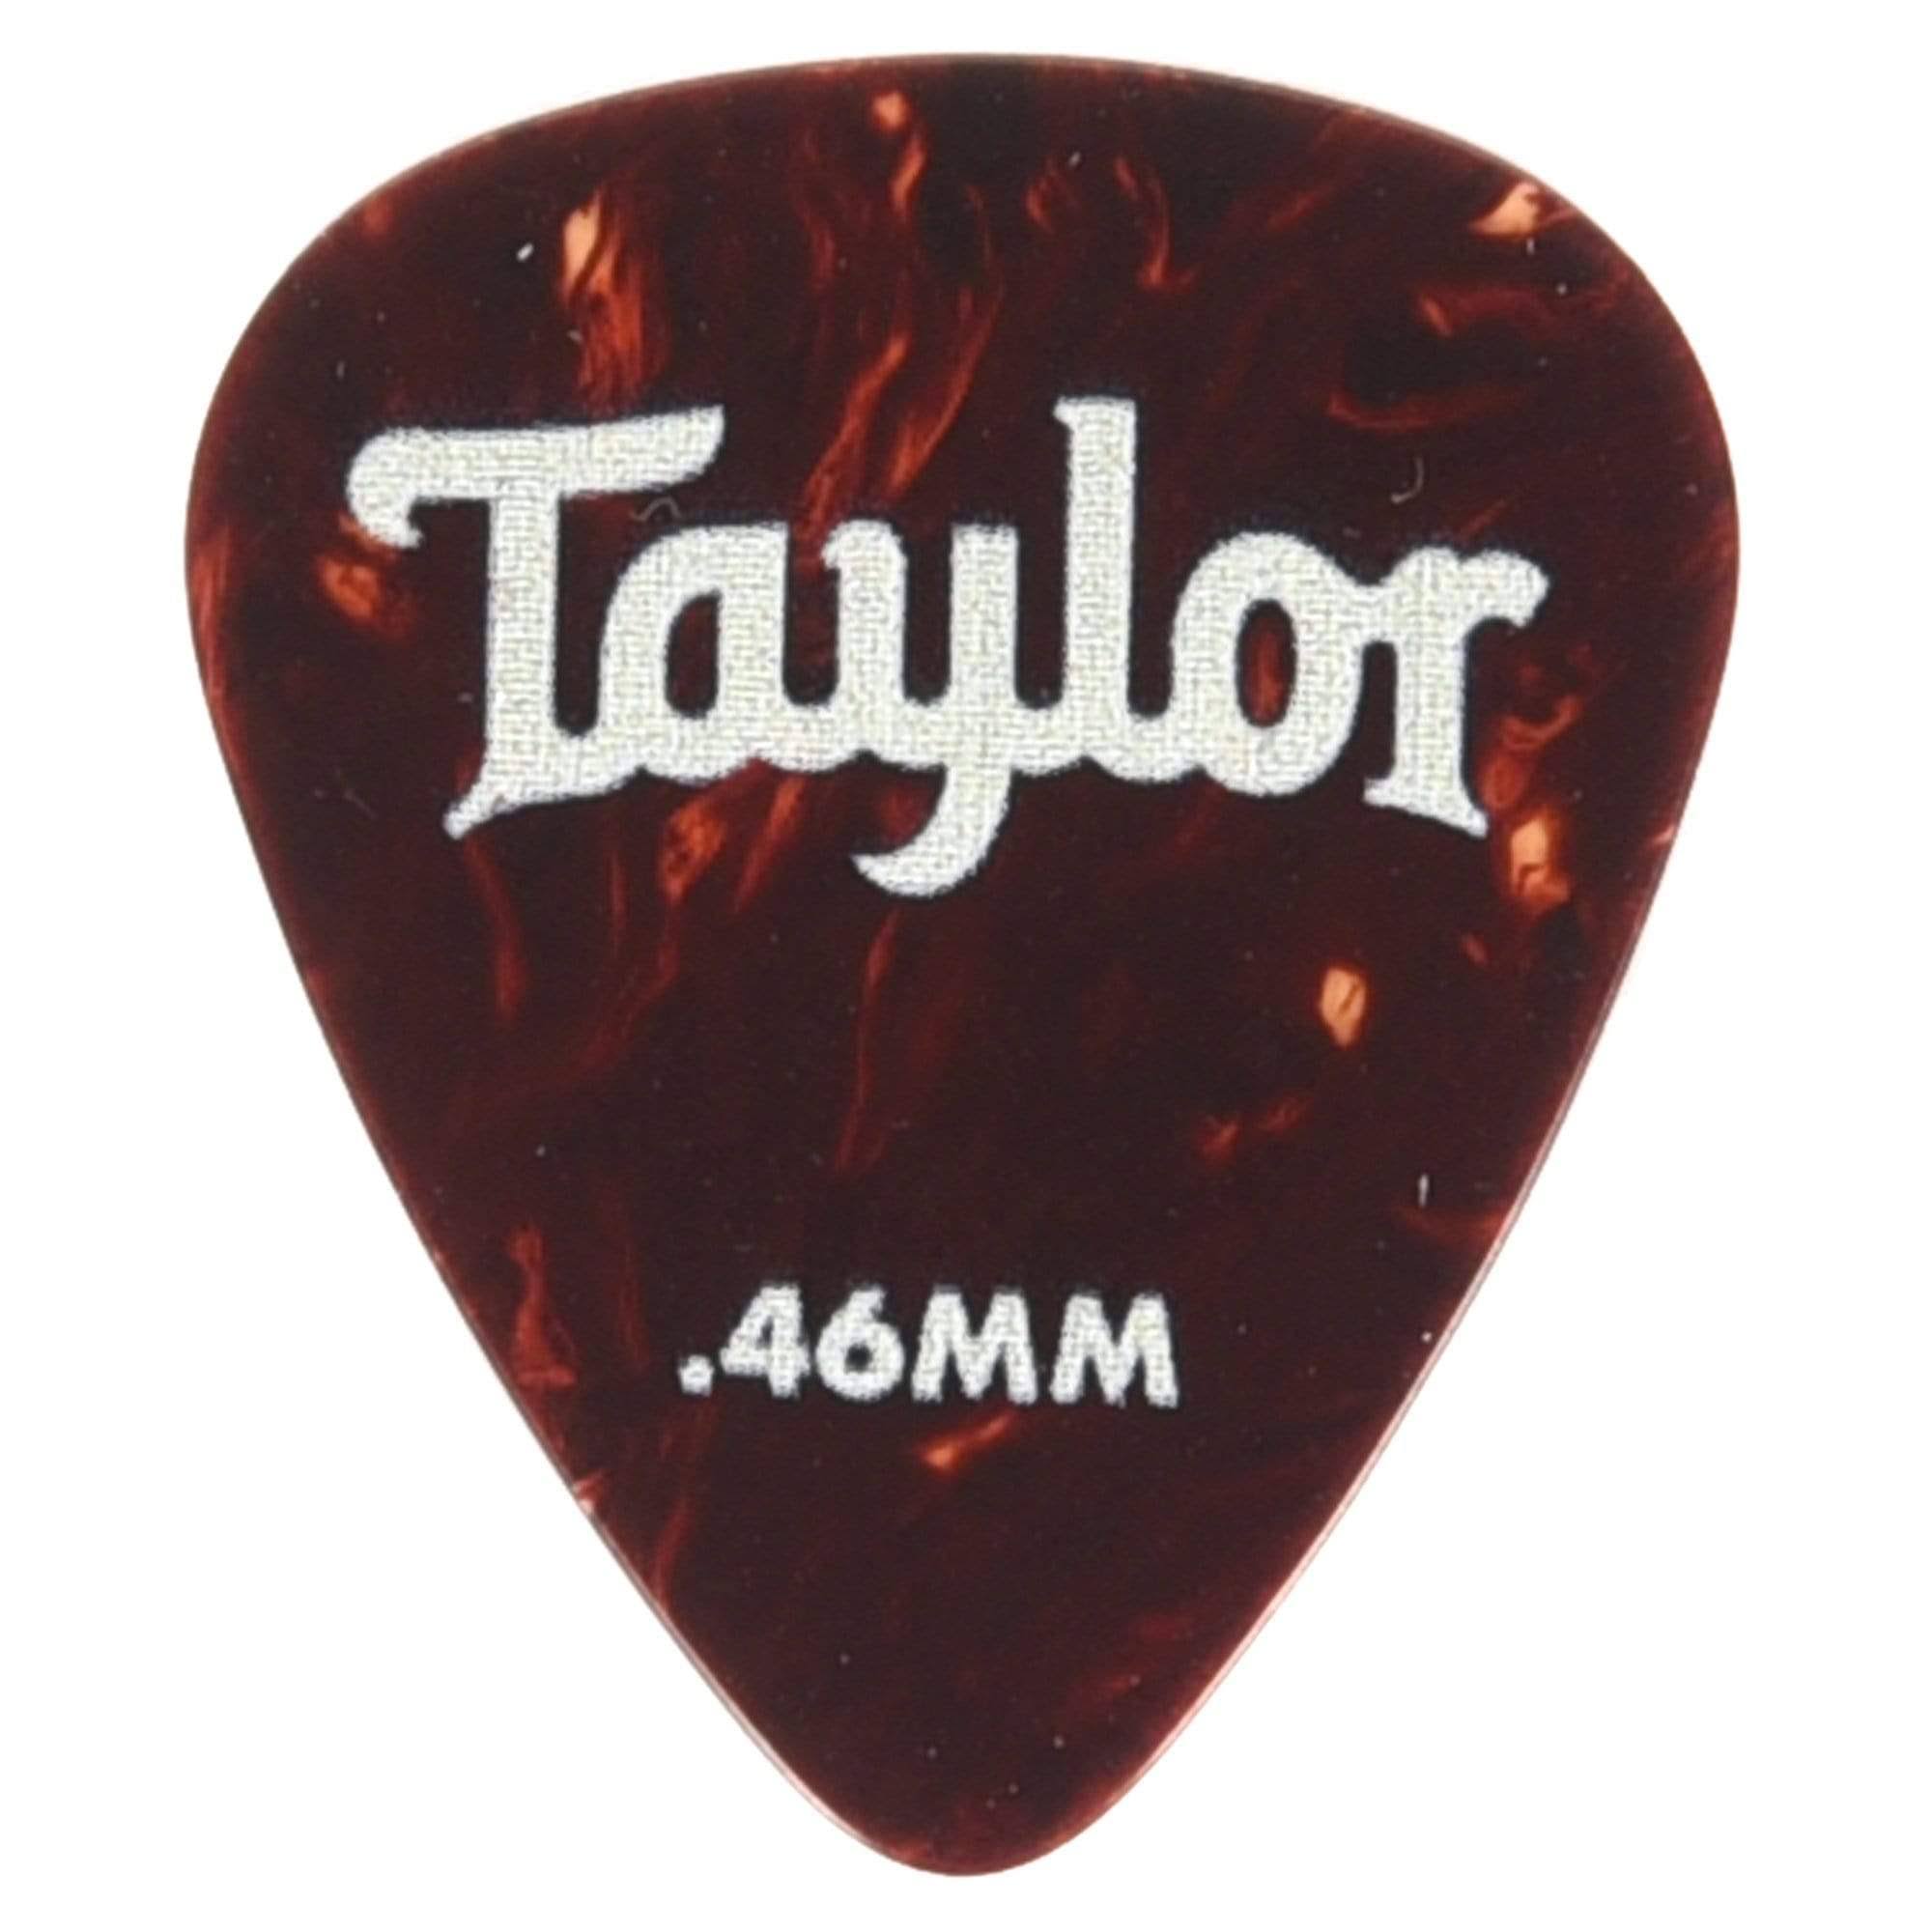 Taylor Picks - Celluloid 351, Tortoise Shell, .46 mm, 12 Pack